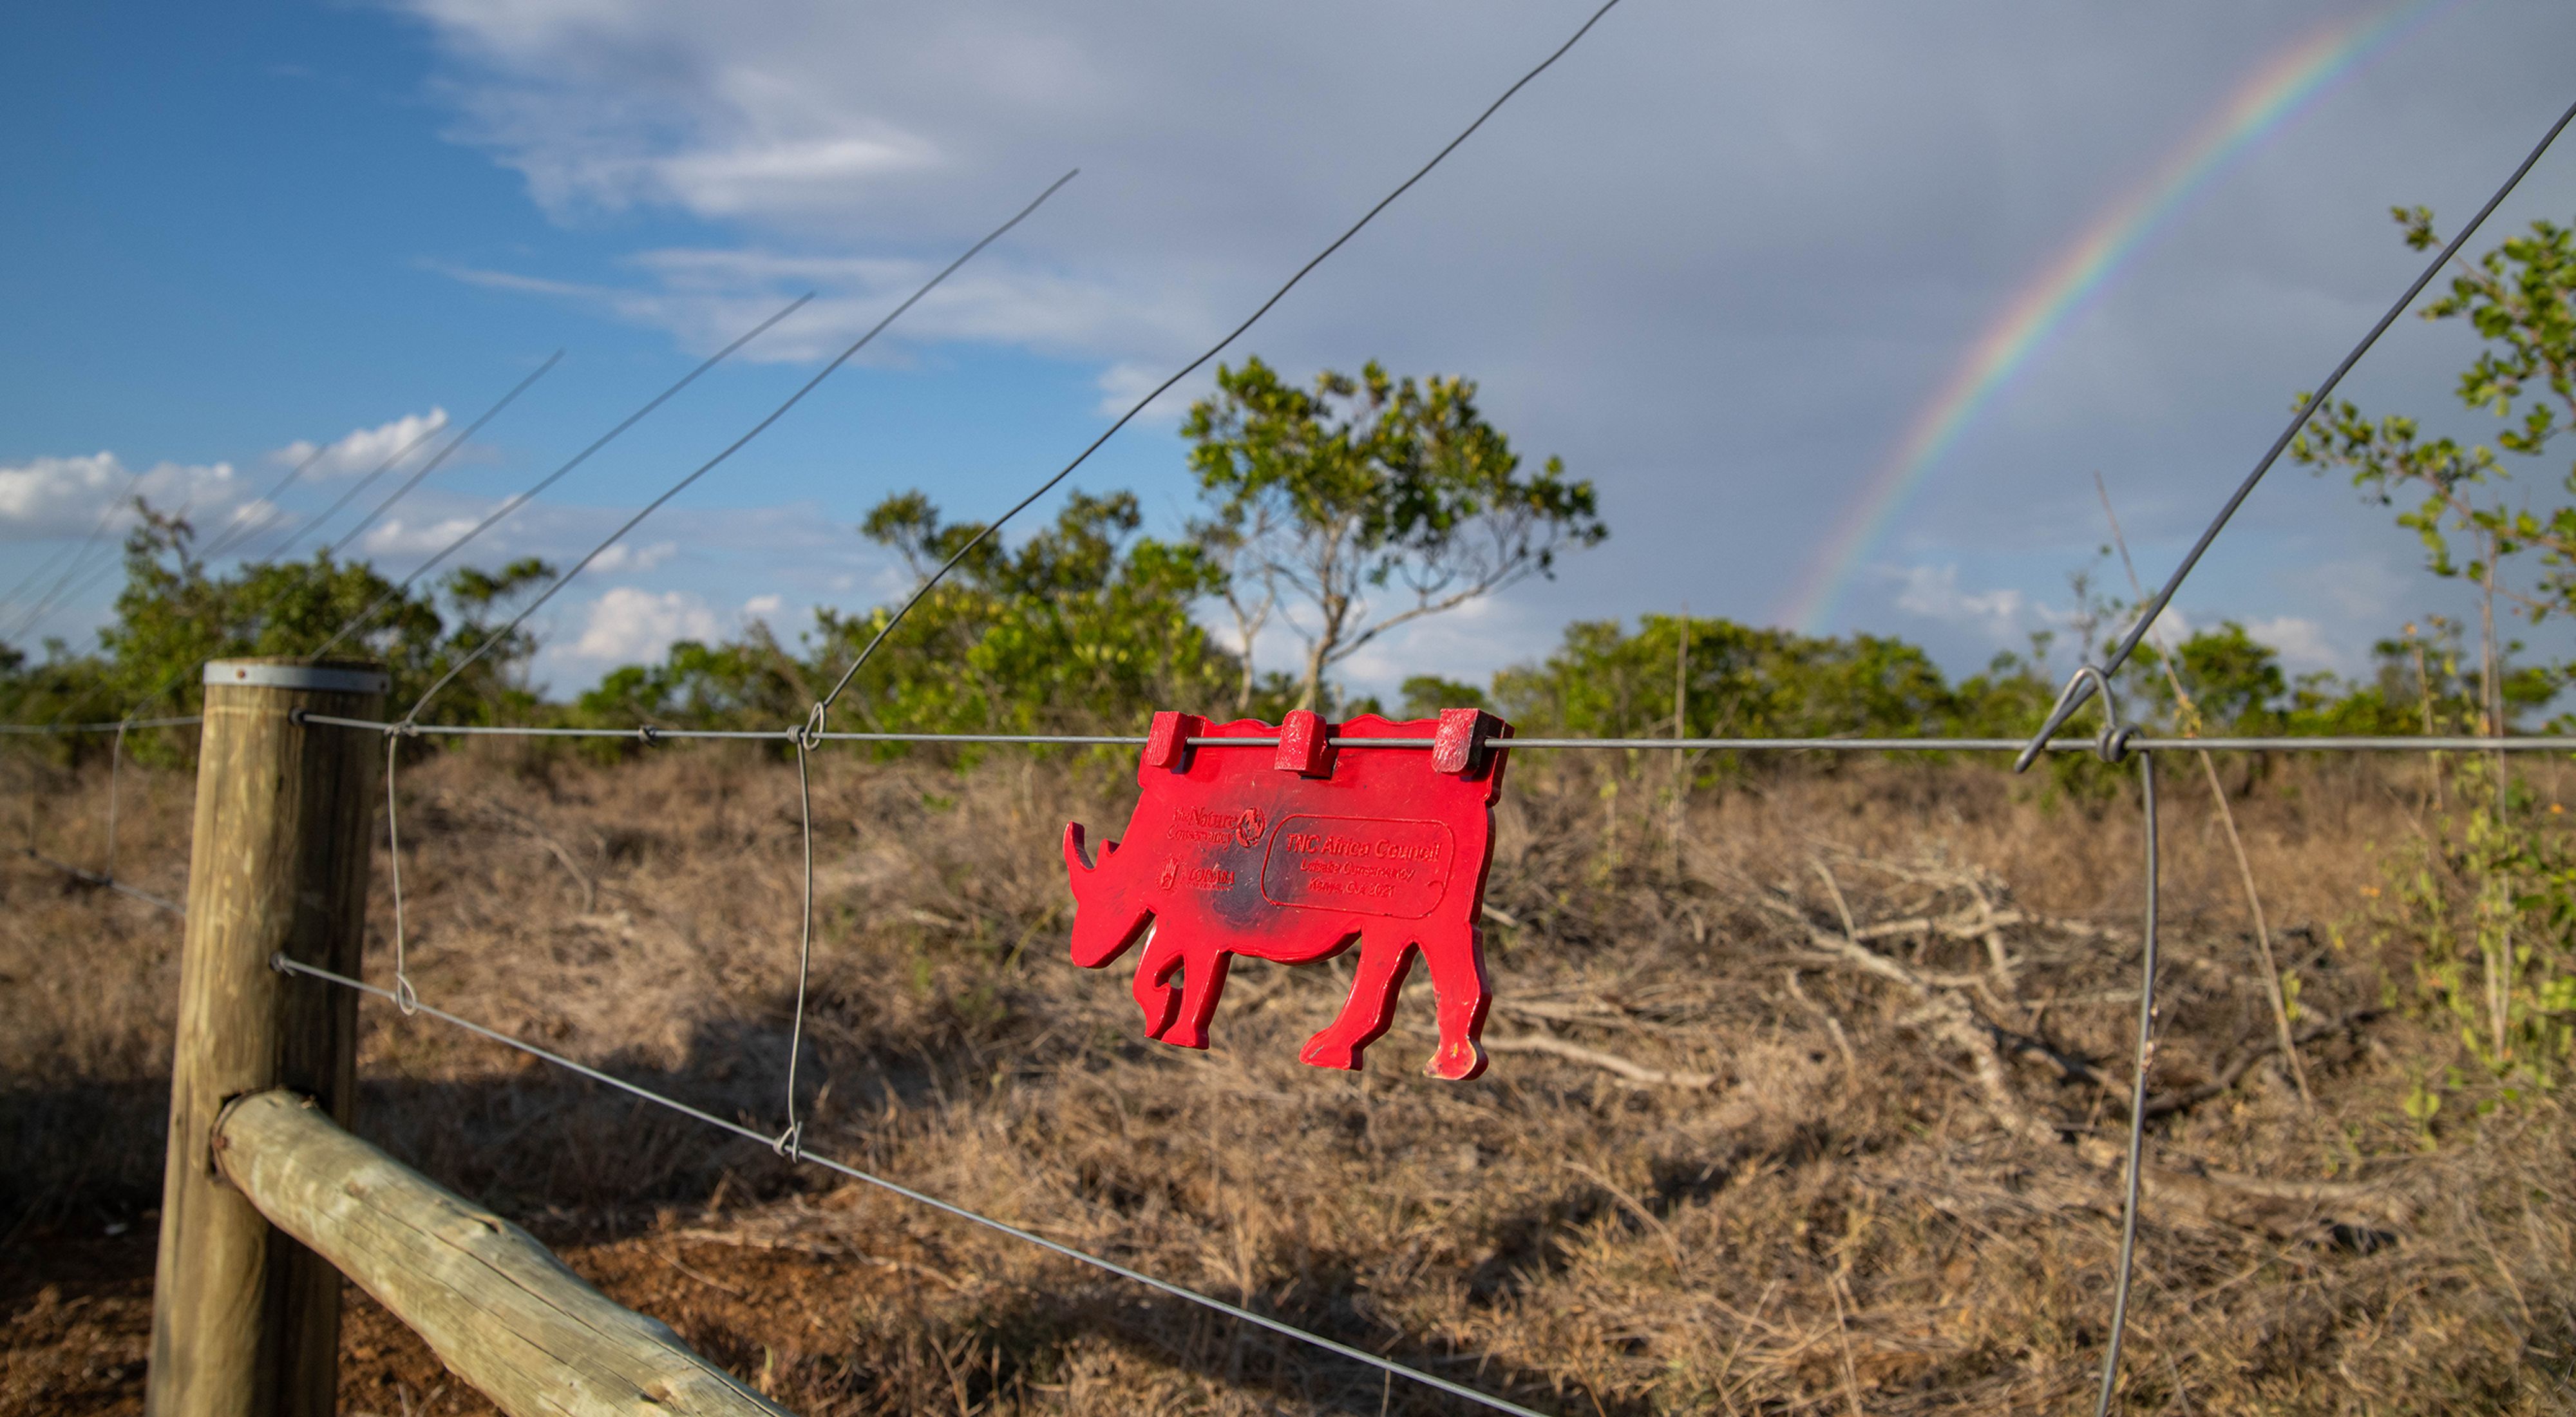 A flat cutout shaped like a rhino hangs from a wire fence